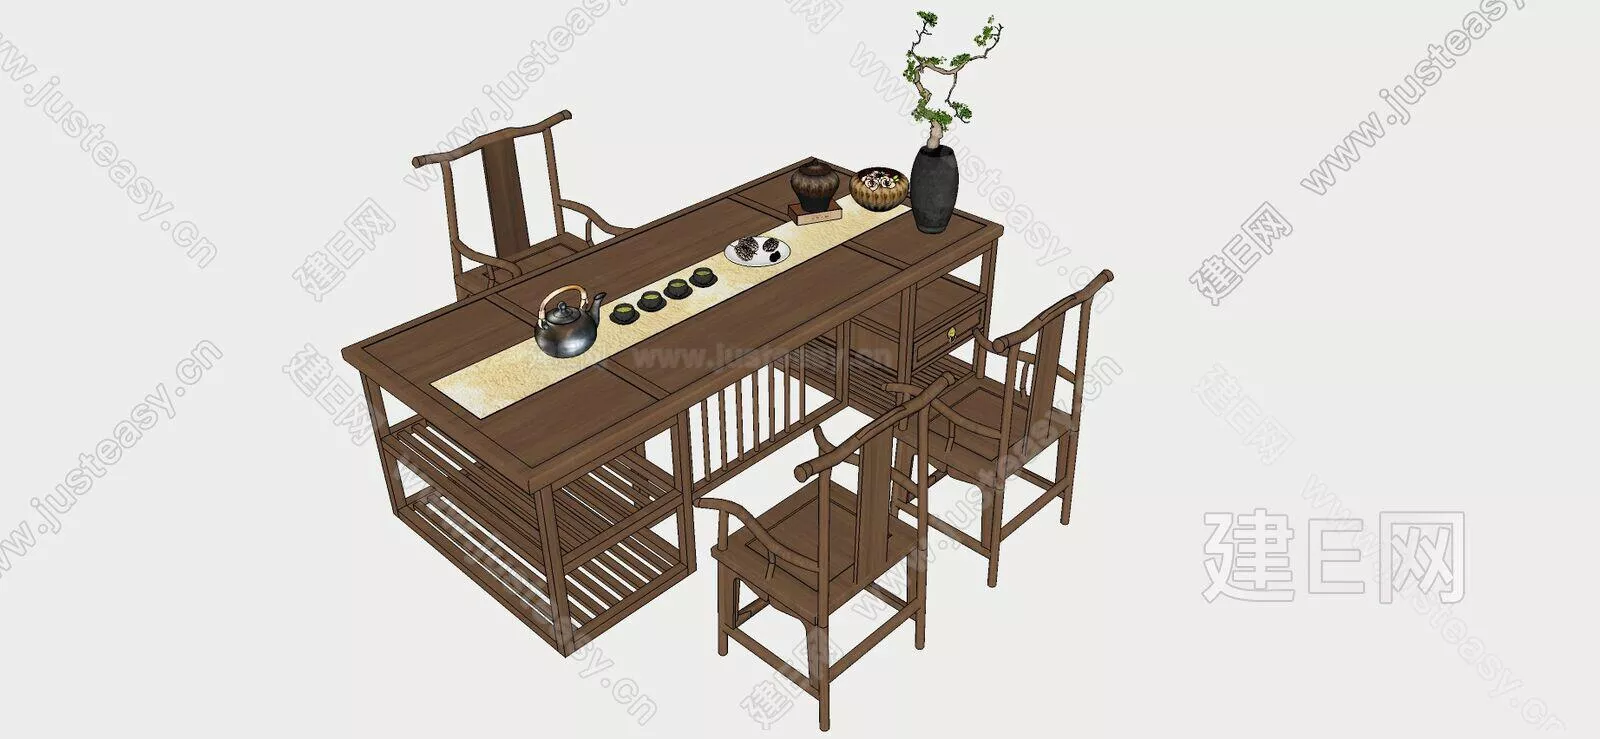 CHINESE TEA TABLE SET - SKETCHUP 3D MODEL - ENSCAPE - 111231413